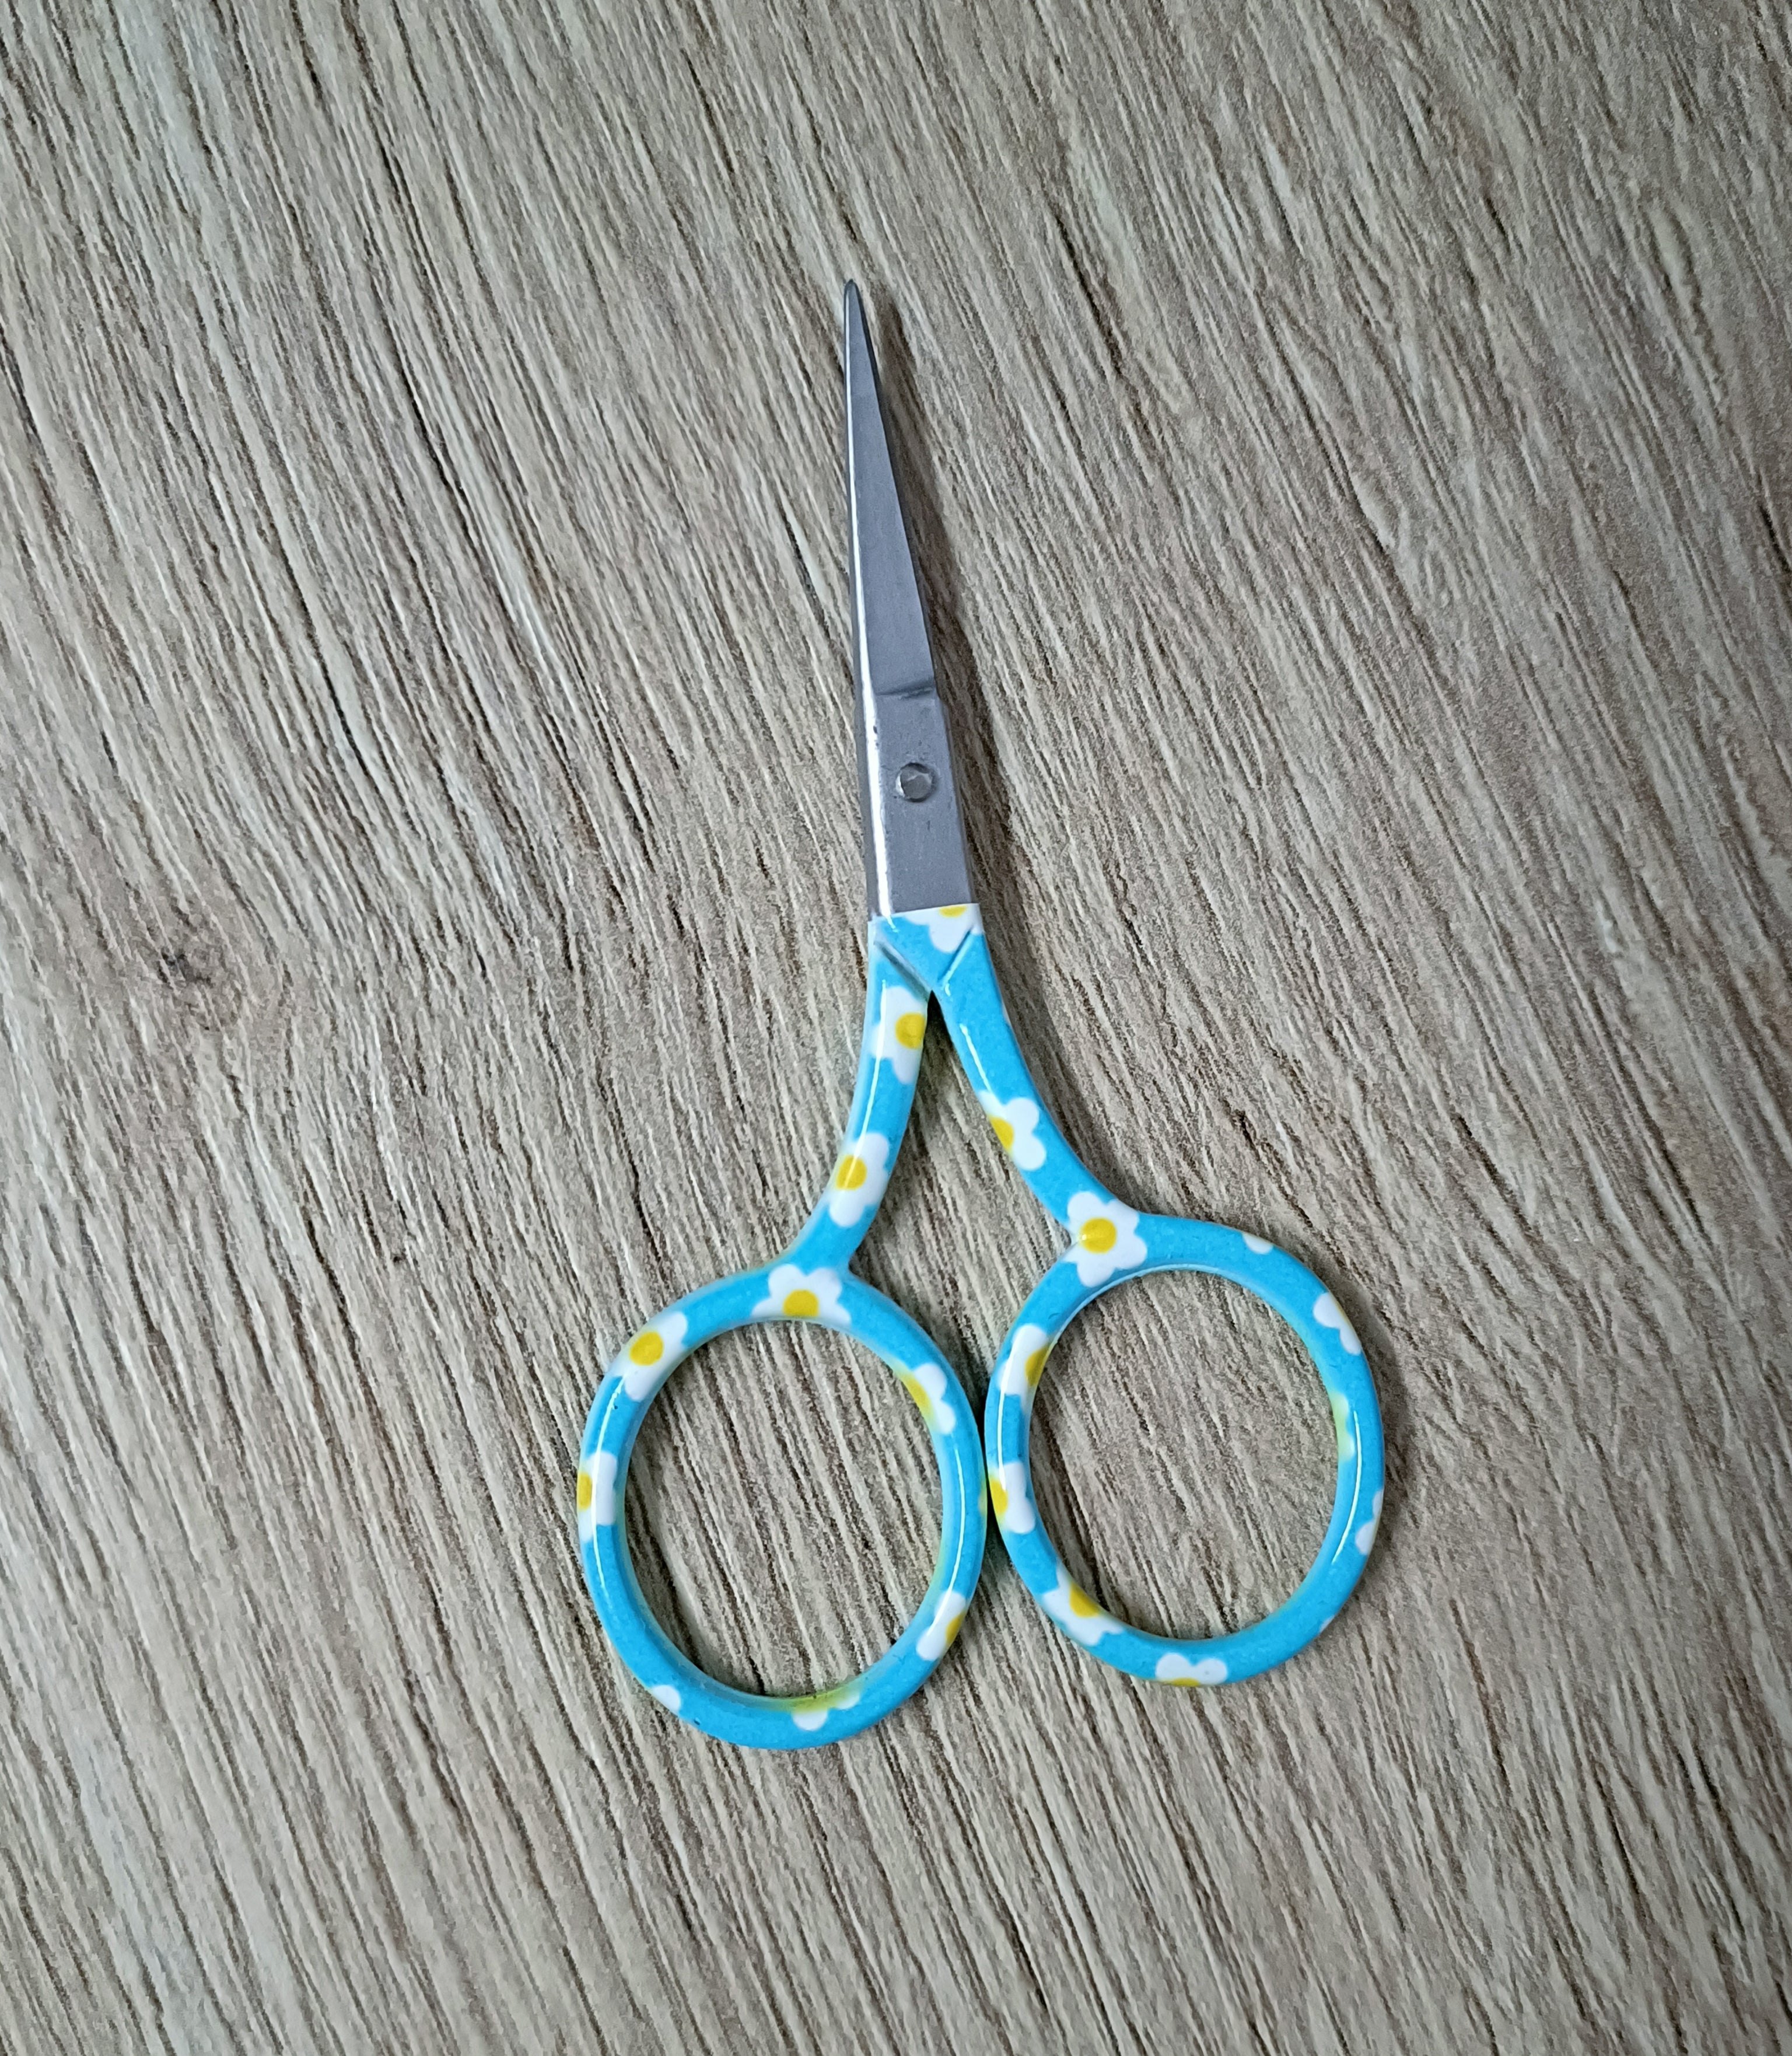 Coloured-handled scissors